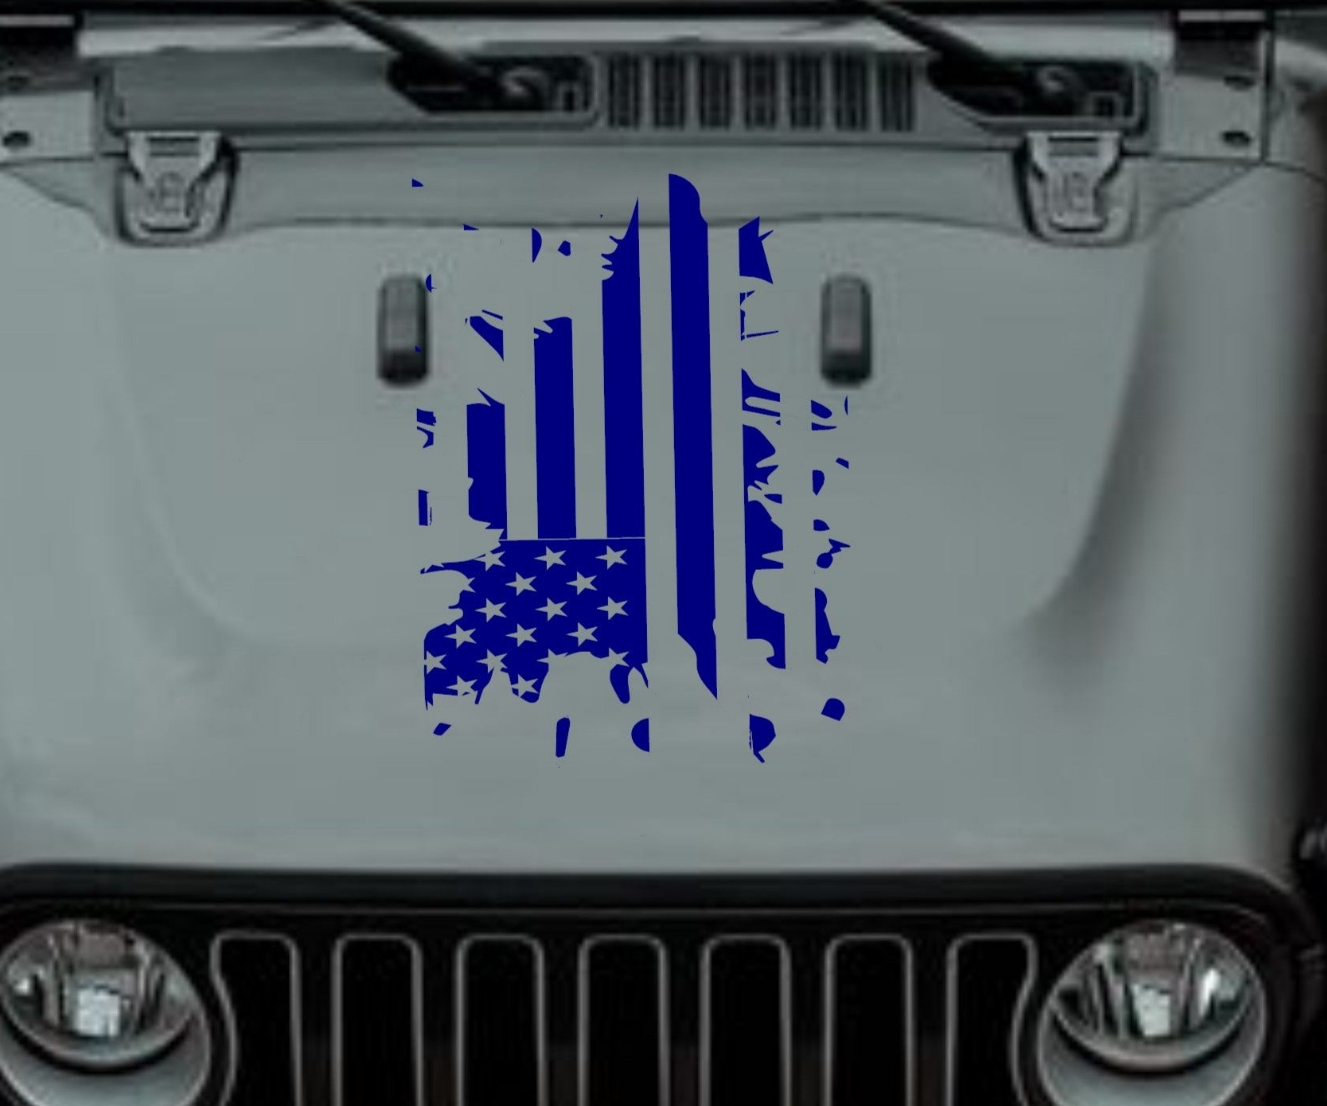 American Flag Hood Decal Sticker for Jeep Wrangler JL, JK, Gladiator, Trucks, Cars, SUVs